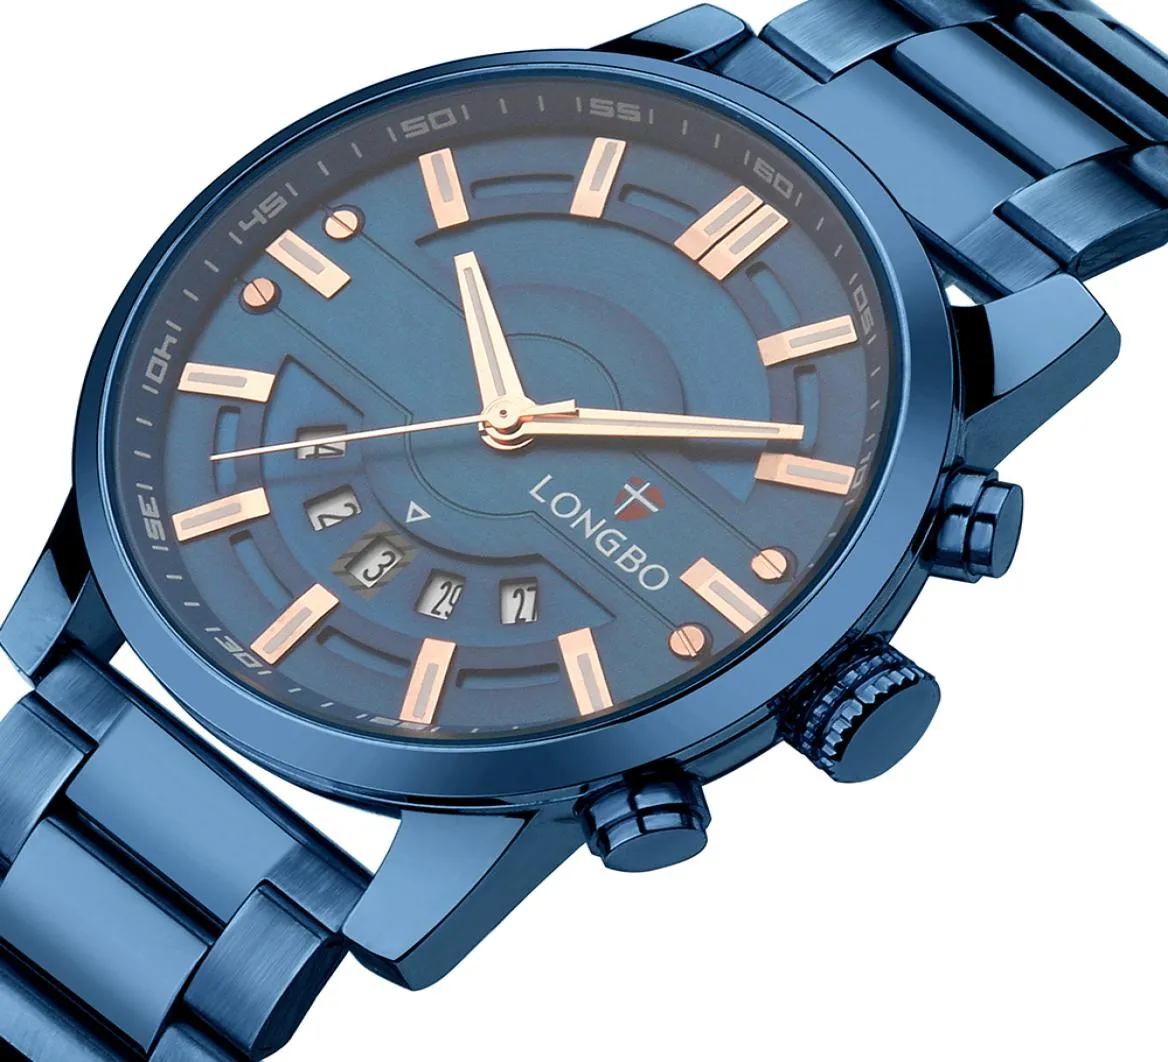 2020 Longbo Top Luxury Brand Men Watch Quartz Male Clock Design Sport Watch Водонепроницаемые наручные часы нержавеющей стали Reloj Hombre 21288559